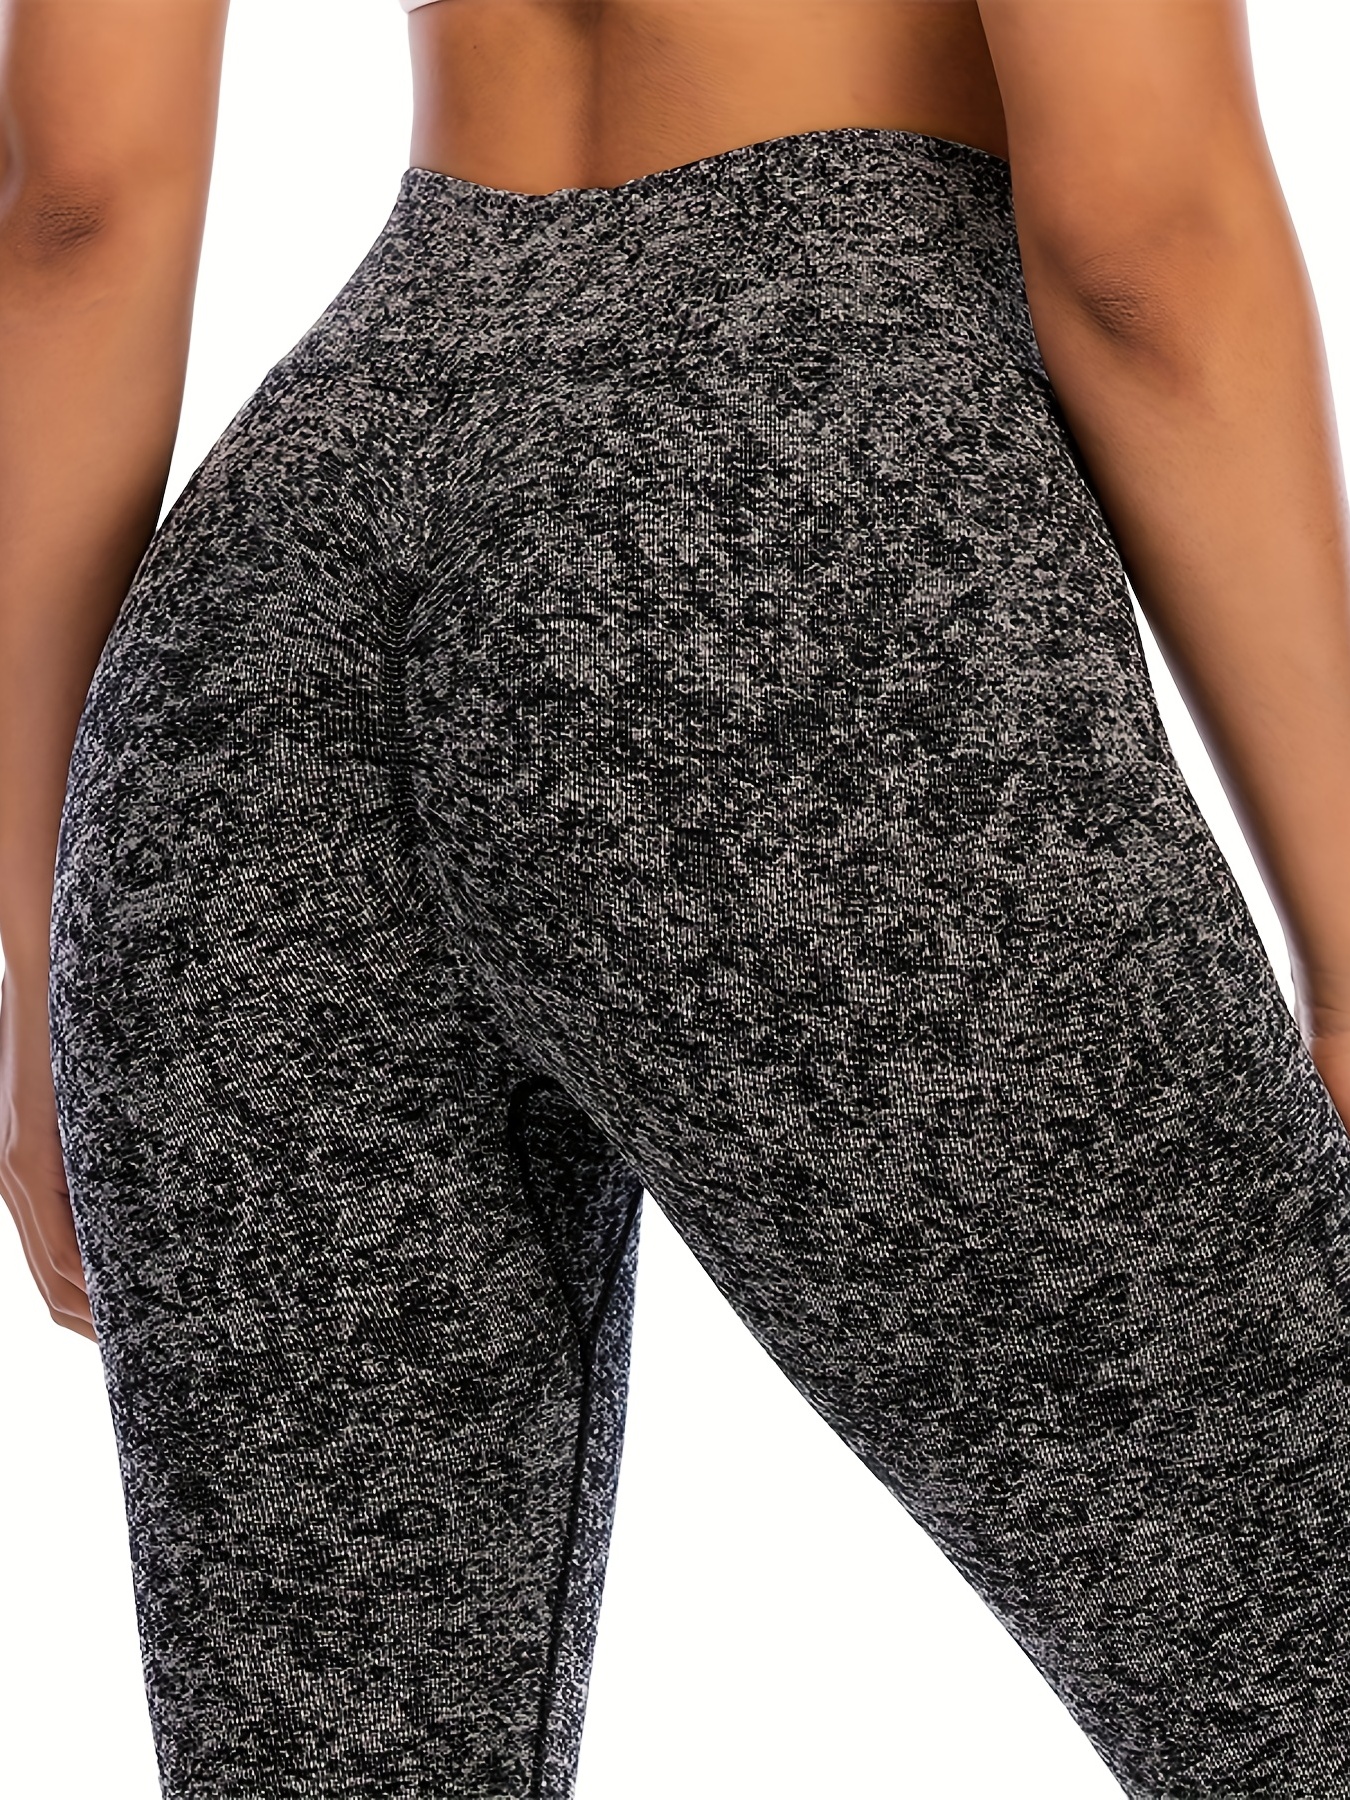  Womens High Waist Yoga Pants Tummy Control Slimming